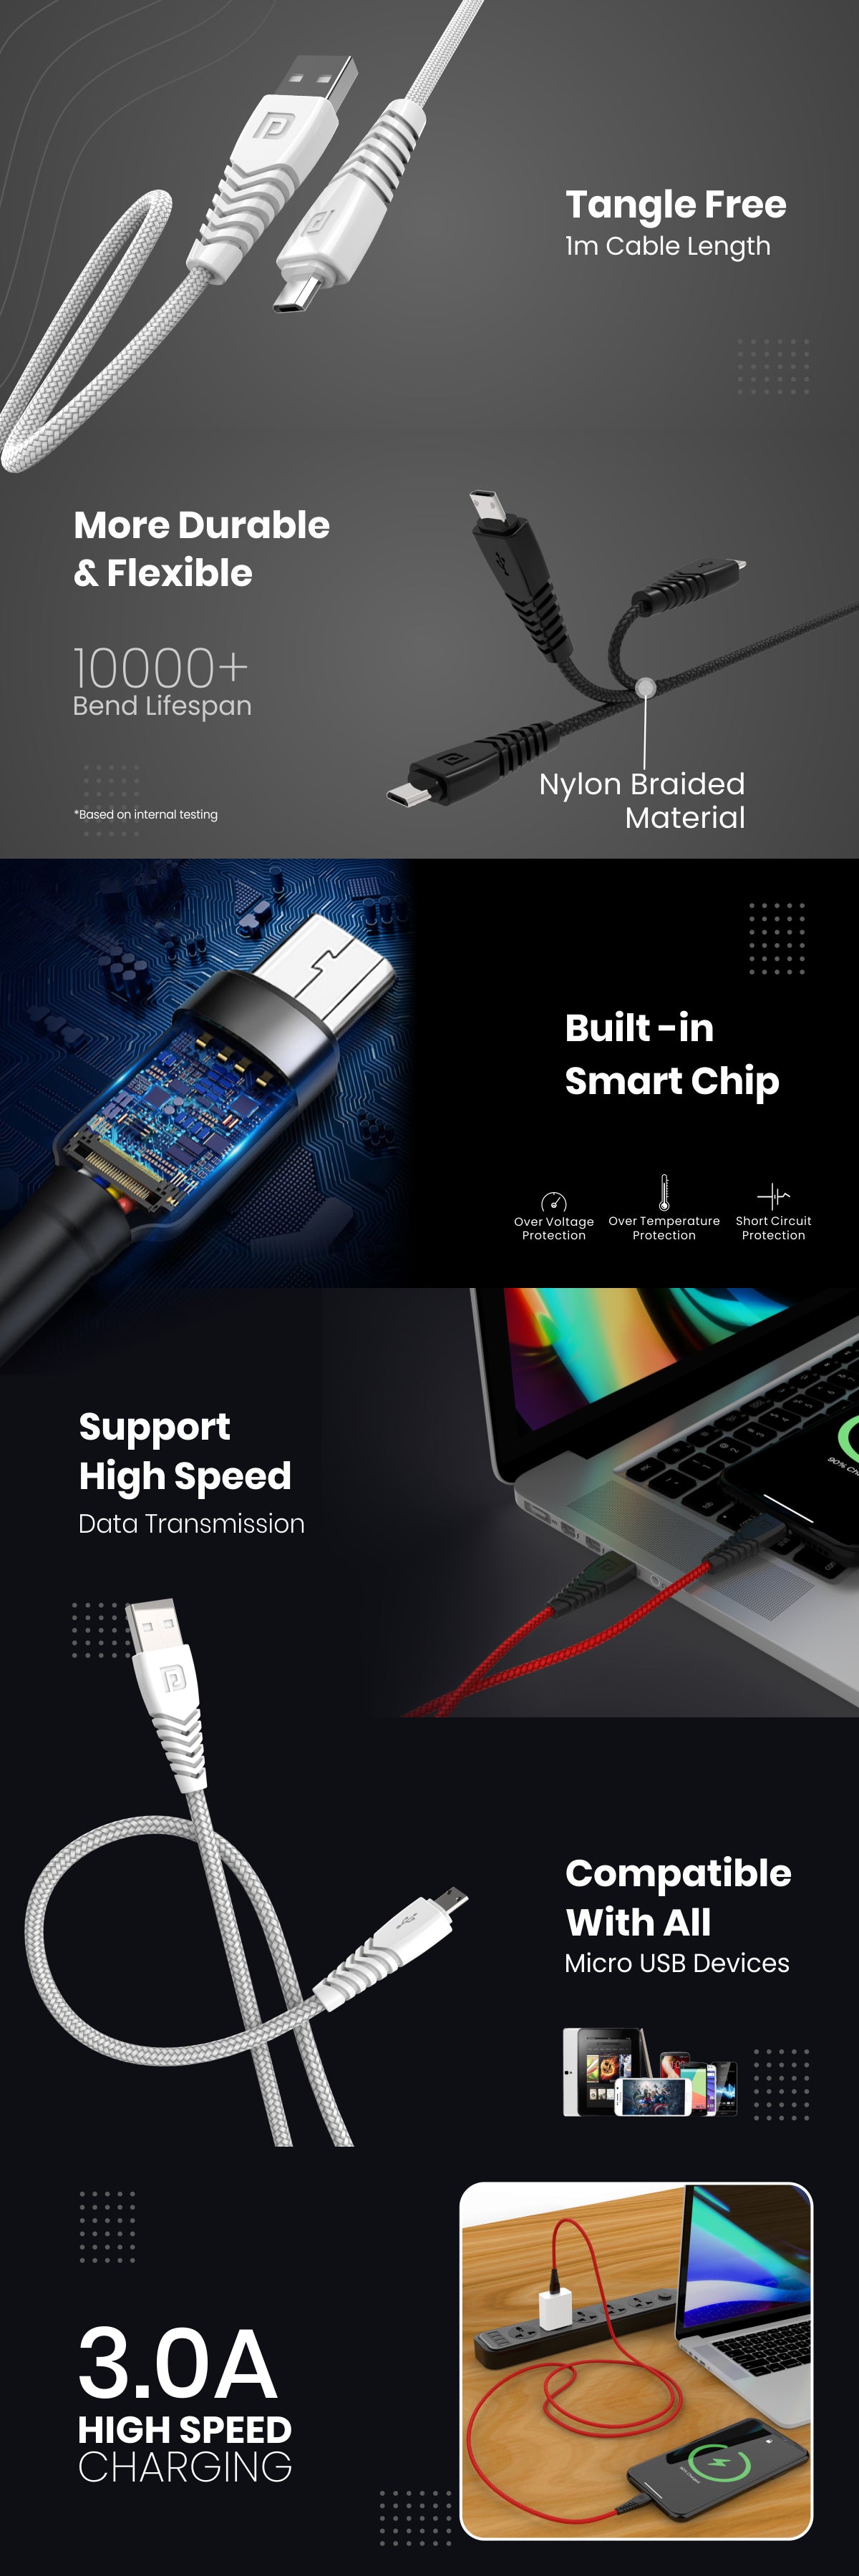 Portronics Konnect B Micro USB Nylon Quick Charging tangle free Cable 